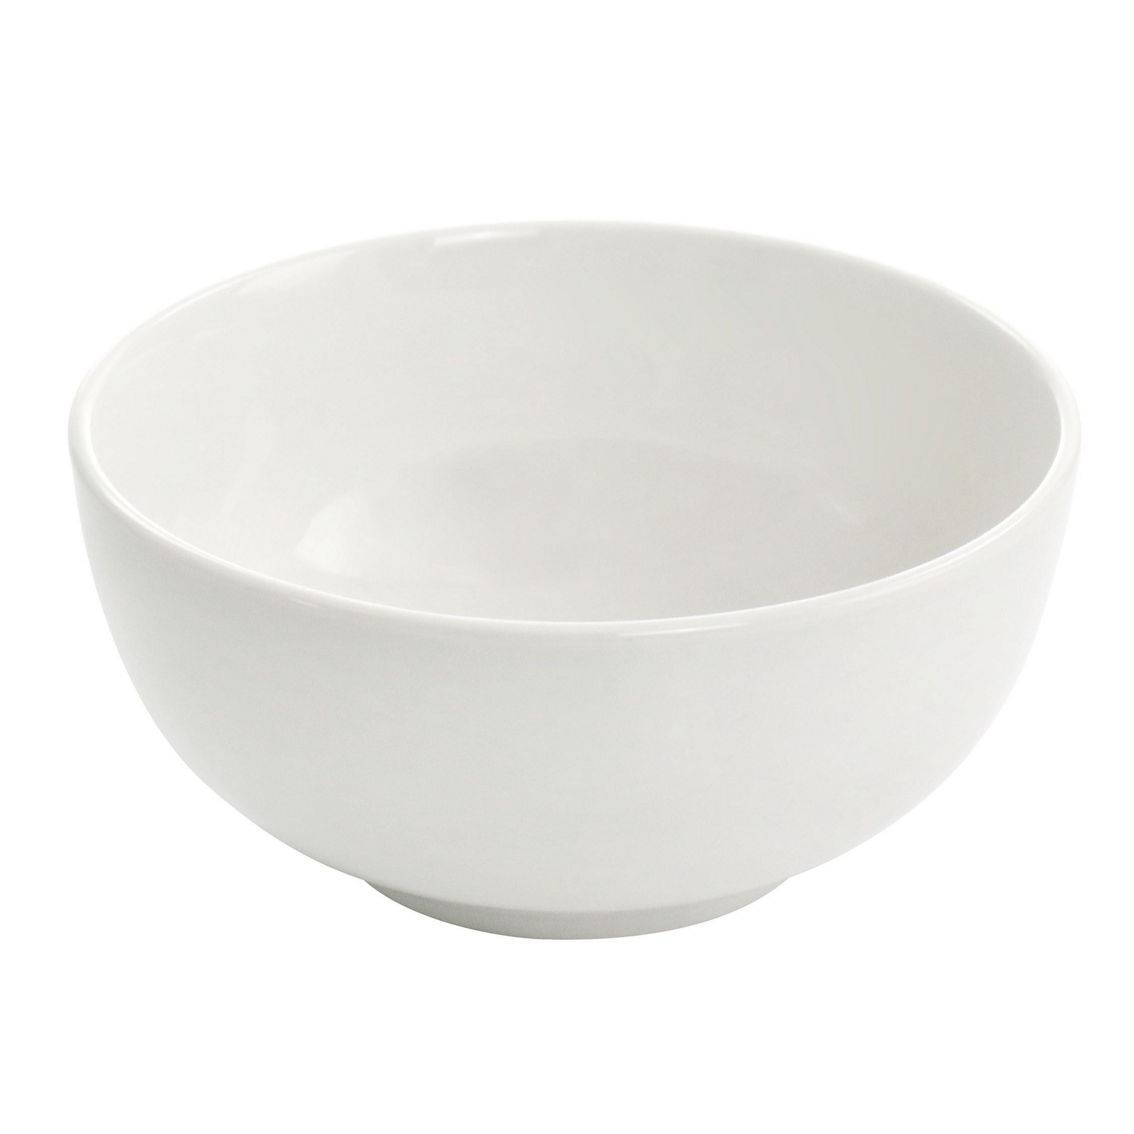 Elama Camellia 16 Piece Porcelain Double Bowl Dinnerware Set - Image 5 of 5